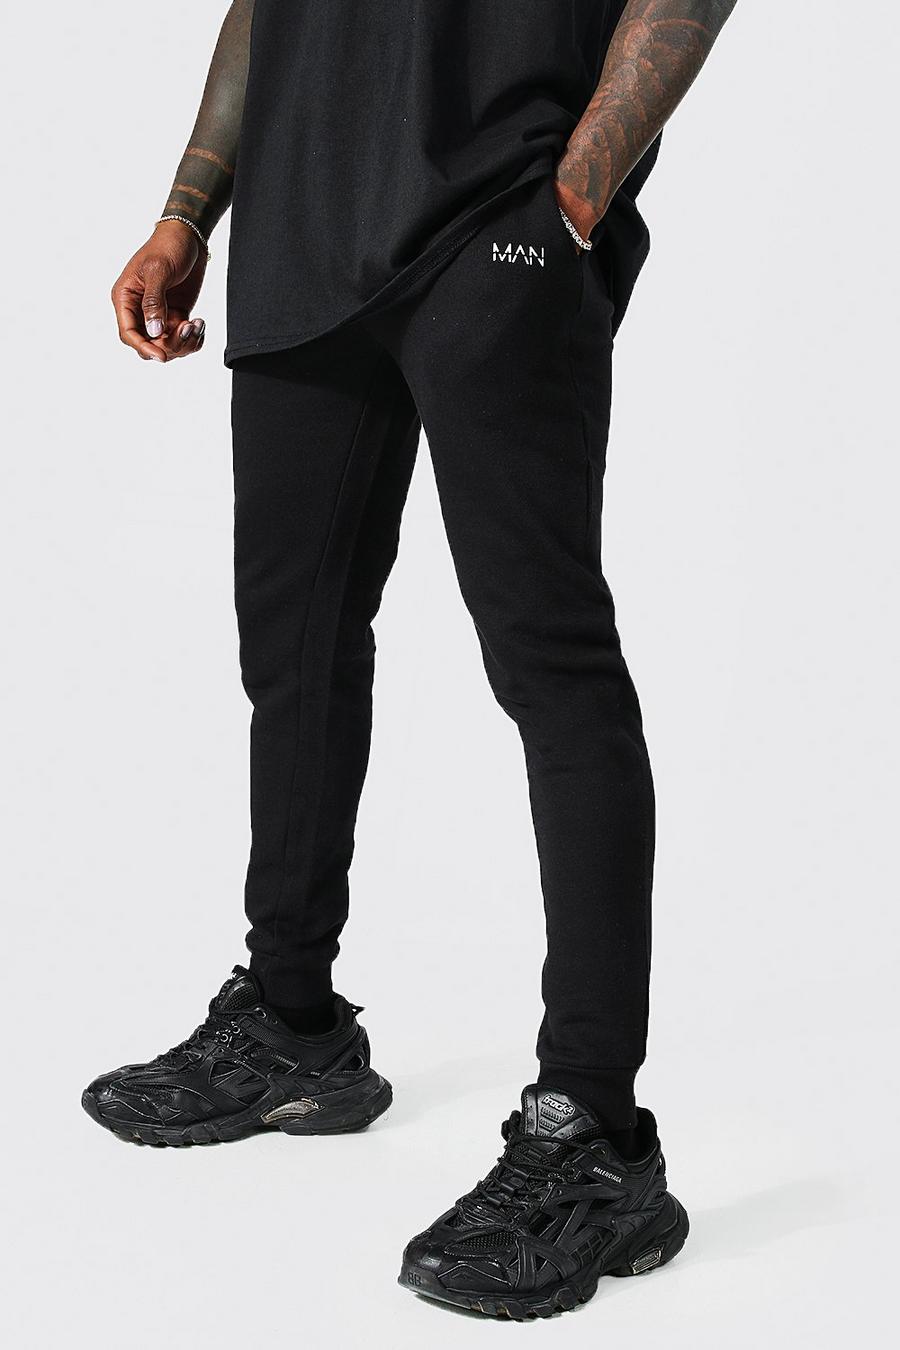 Pantaloni tuta Man Dash Super Skinny Fit, Black nero image number 1